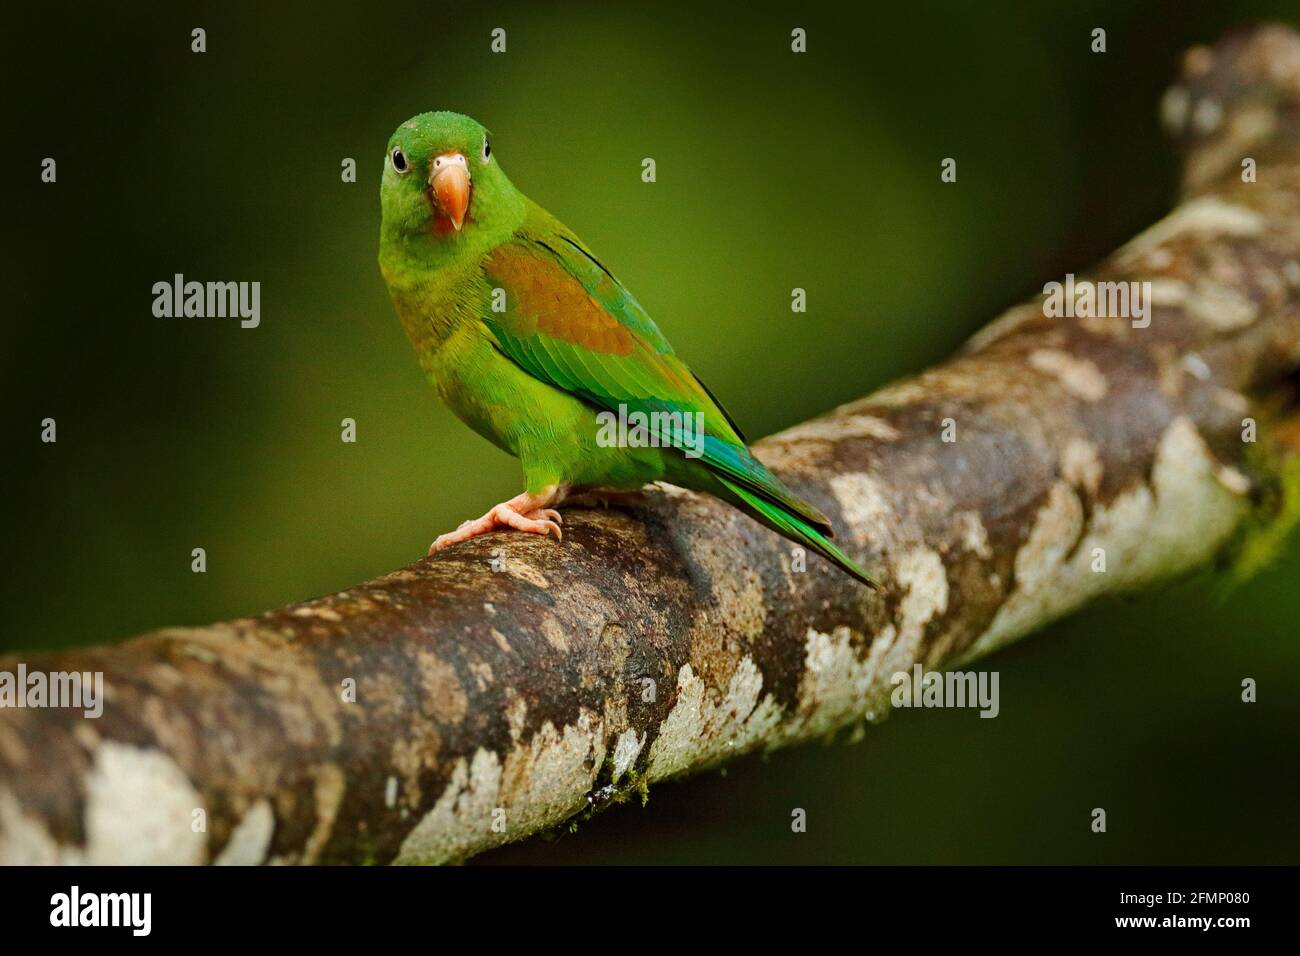 Tovi orange-chinned parakeet, Brotogeris jugularis, portrait of light green parrot with red head, Costa Rica. Wildlife scene from tropical nature. Bir Stock Photo